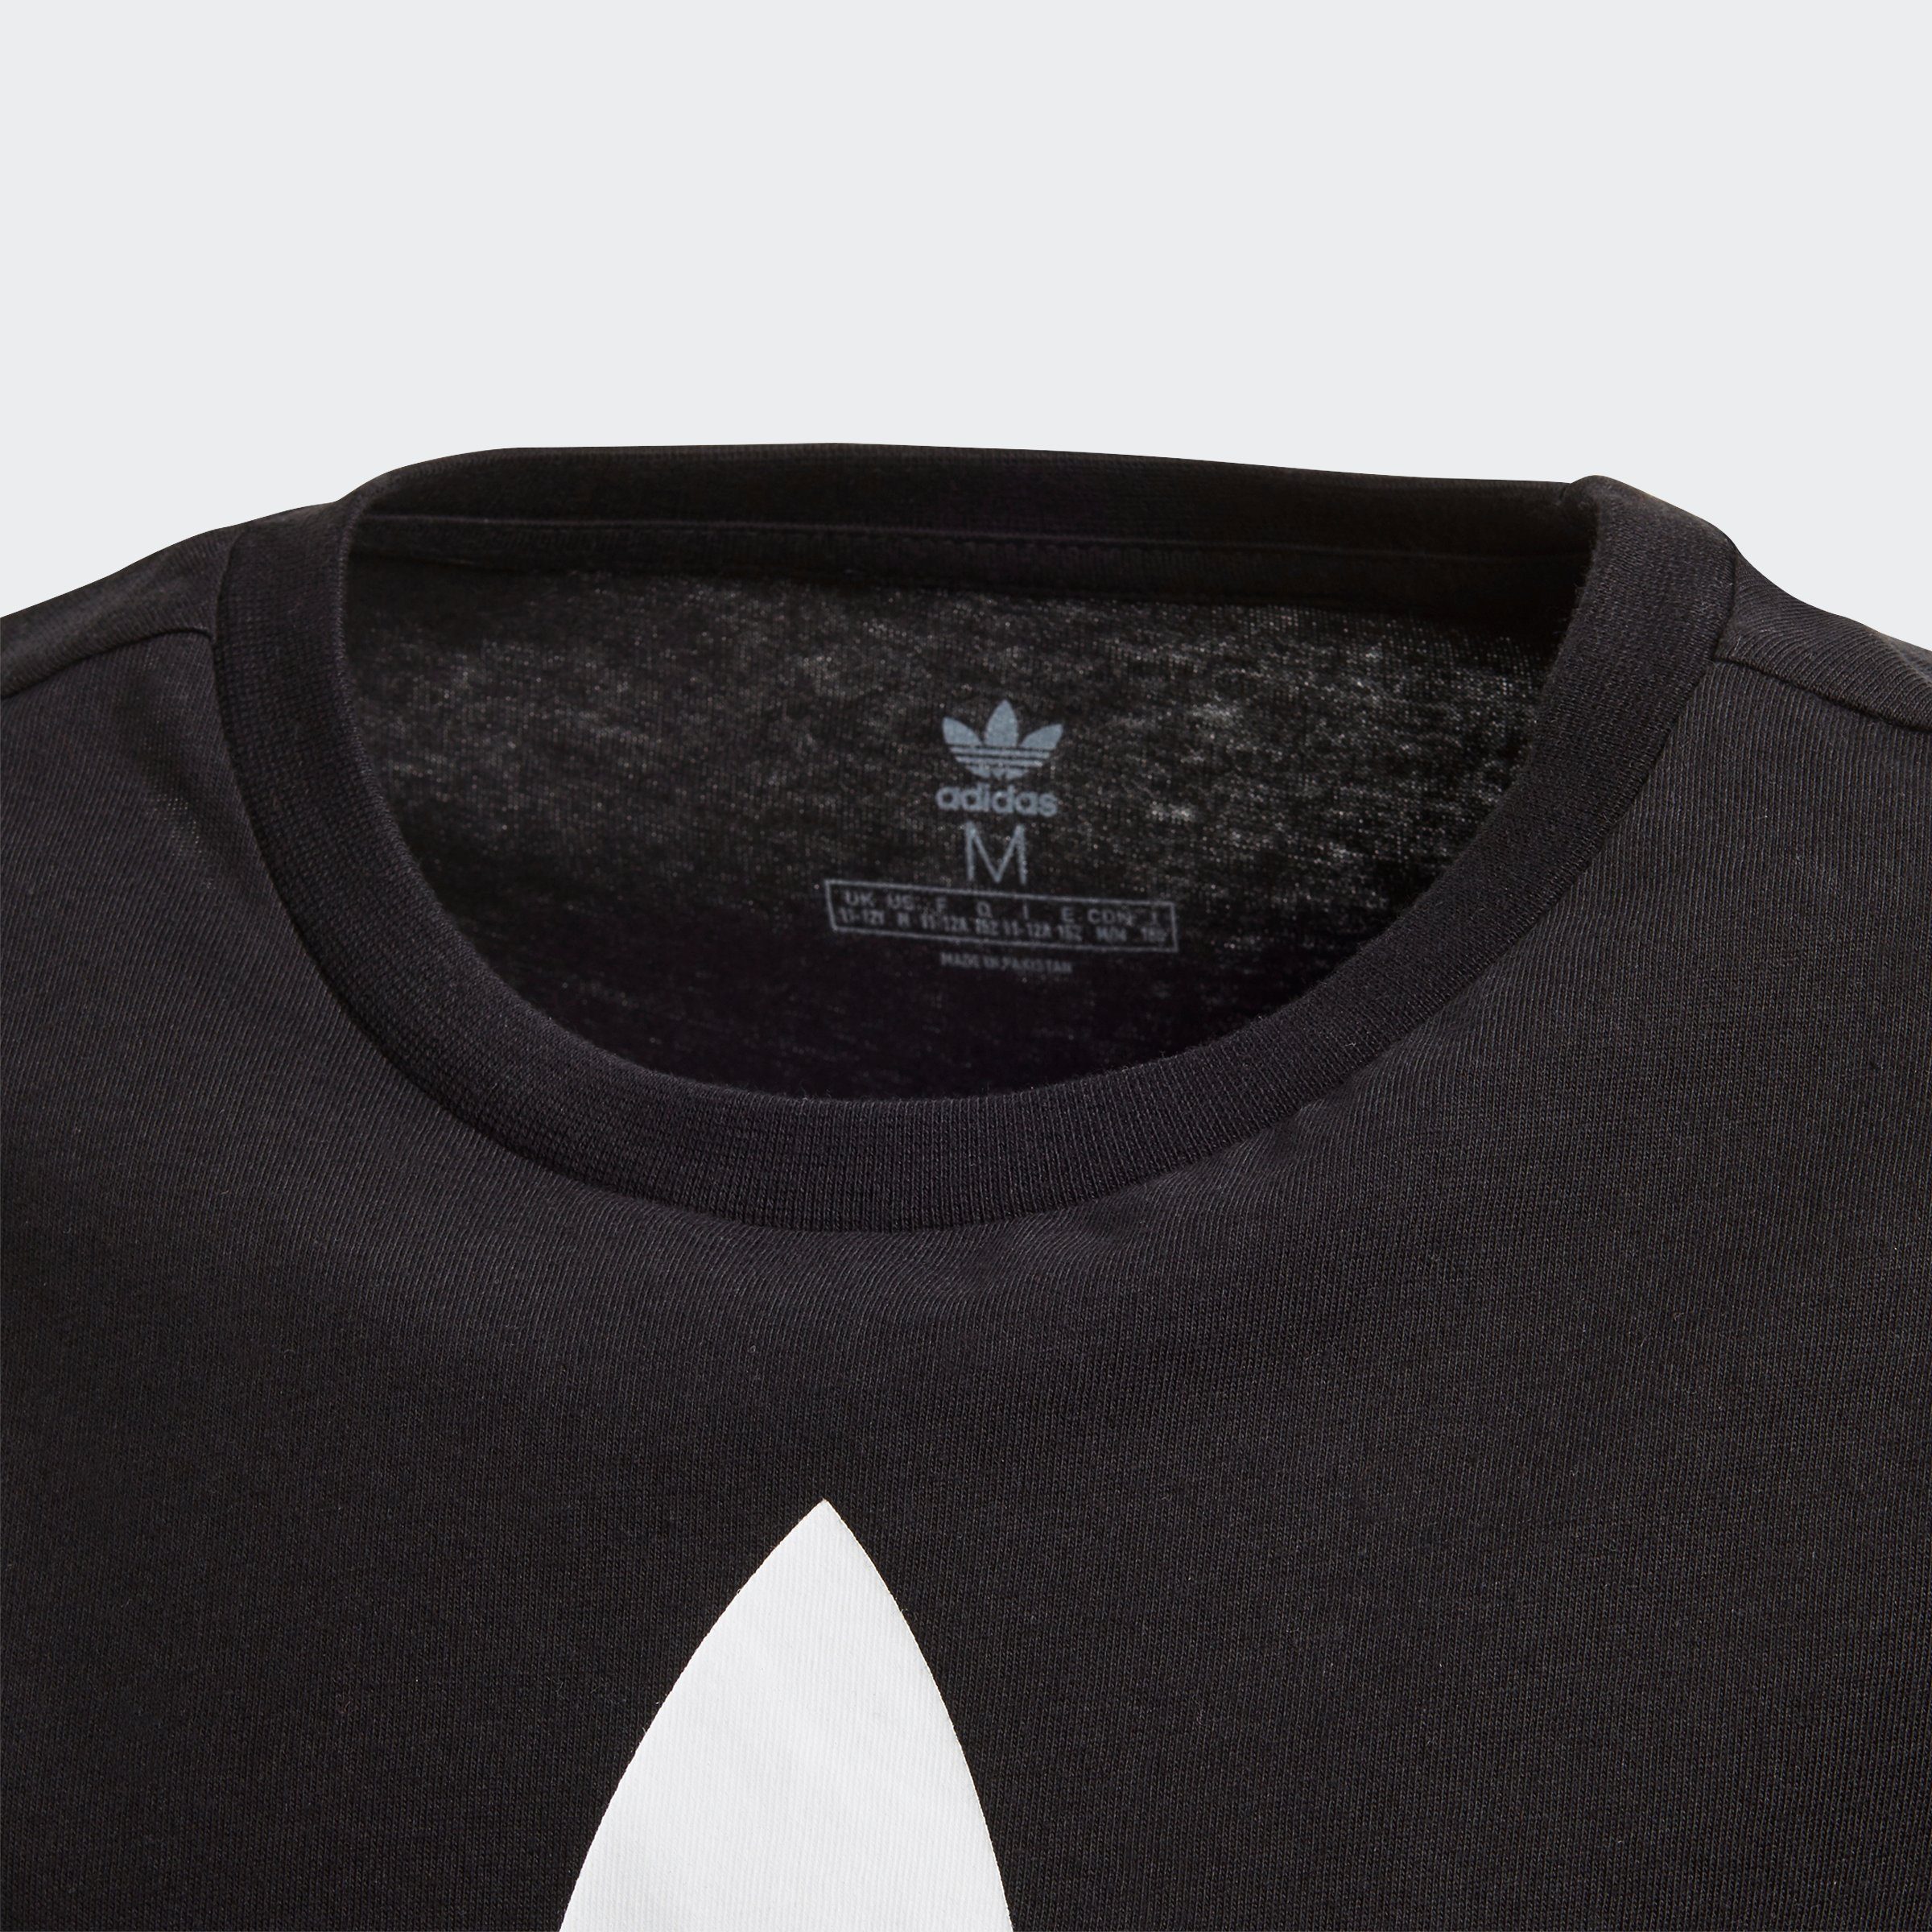 TREFOIL / TEE Black White Originals adidas Unisex T-Shirt